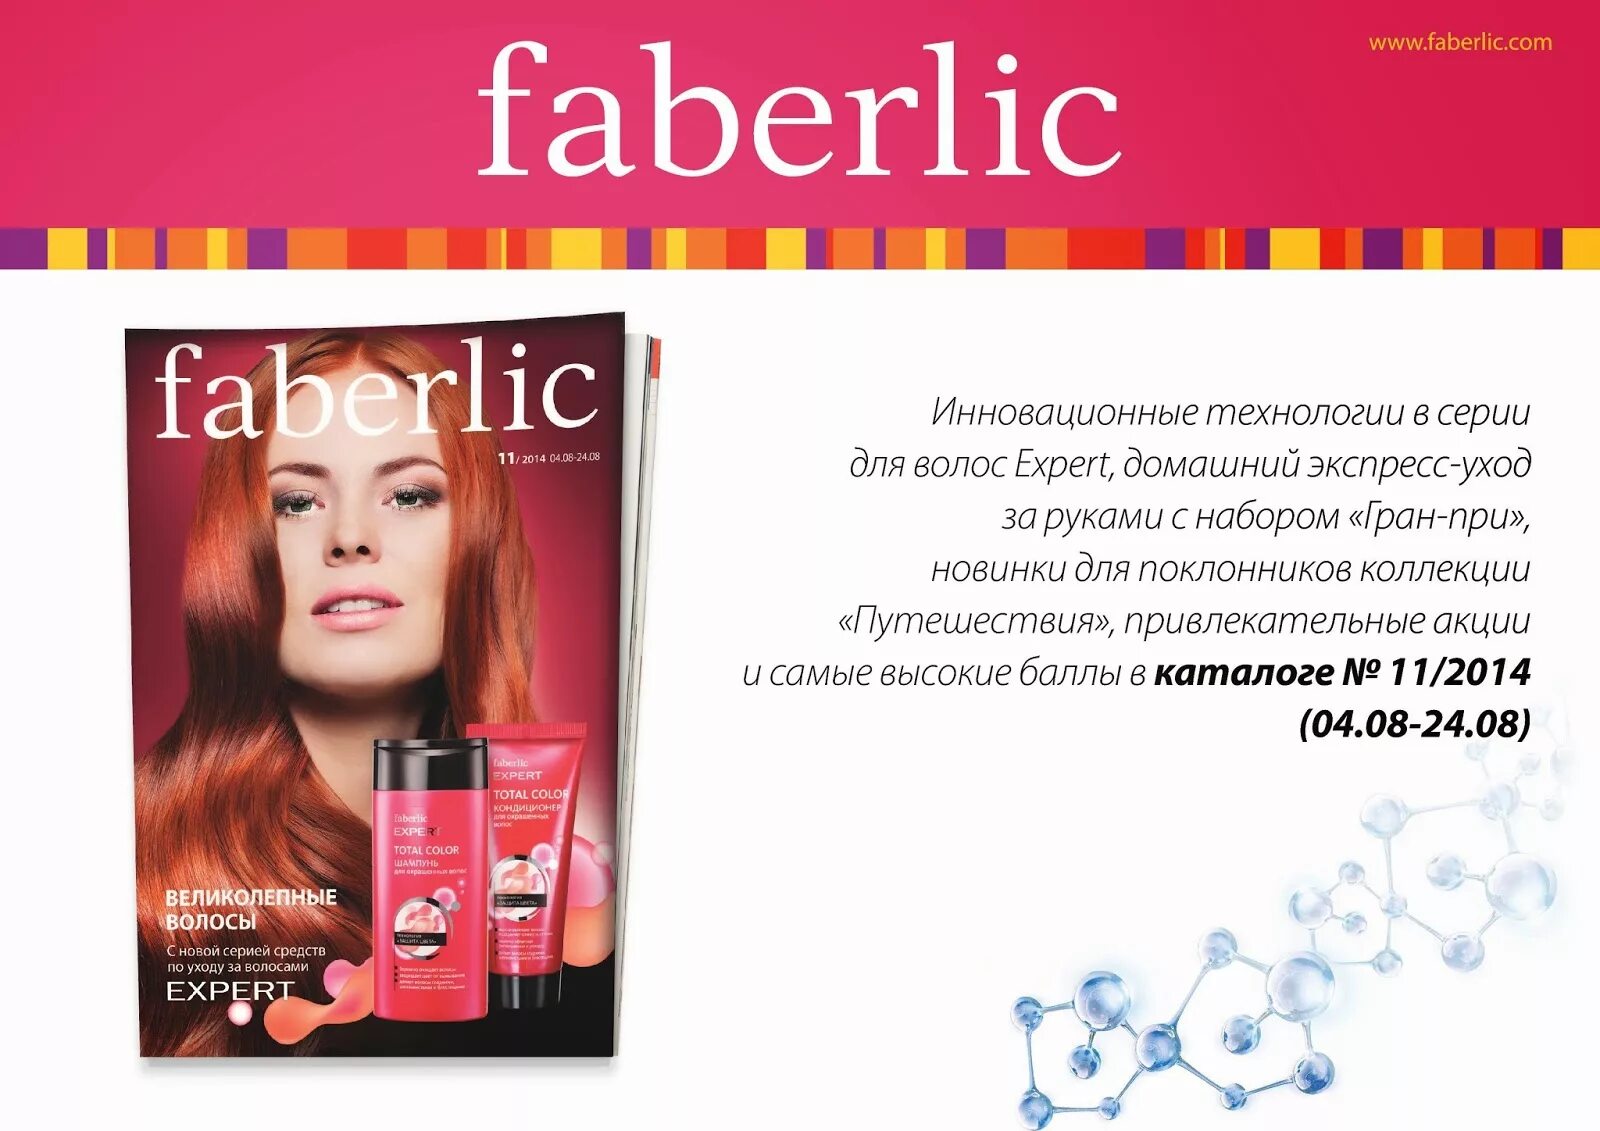 Https faberlic com index php option. Faberlic визитка. Визитки Фаберлик фото. Визитка шаблон Faberlic. Презентация Фаберлик.